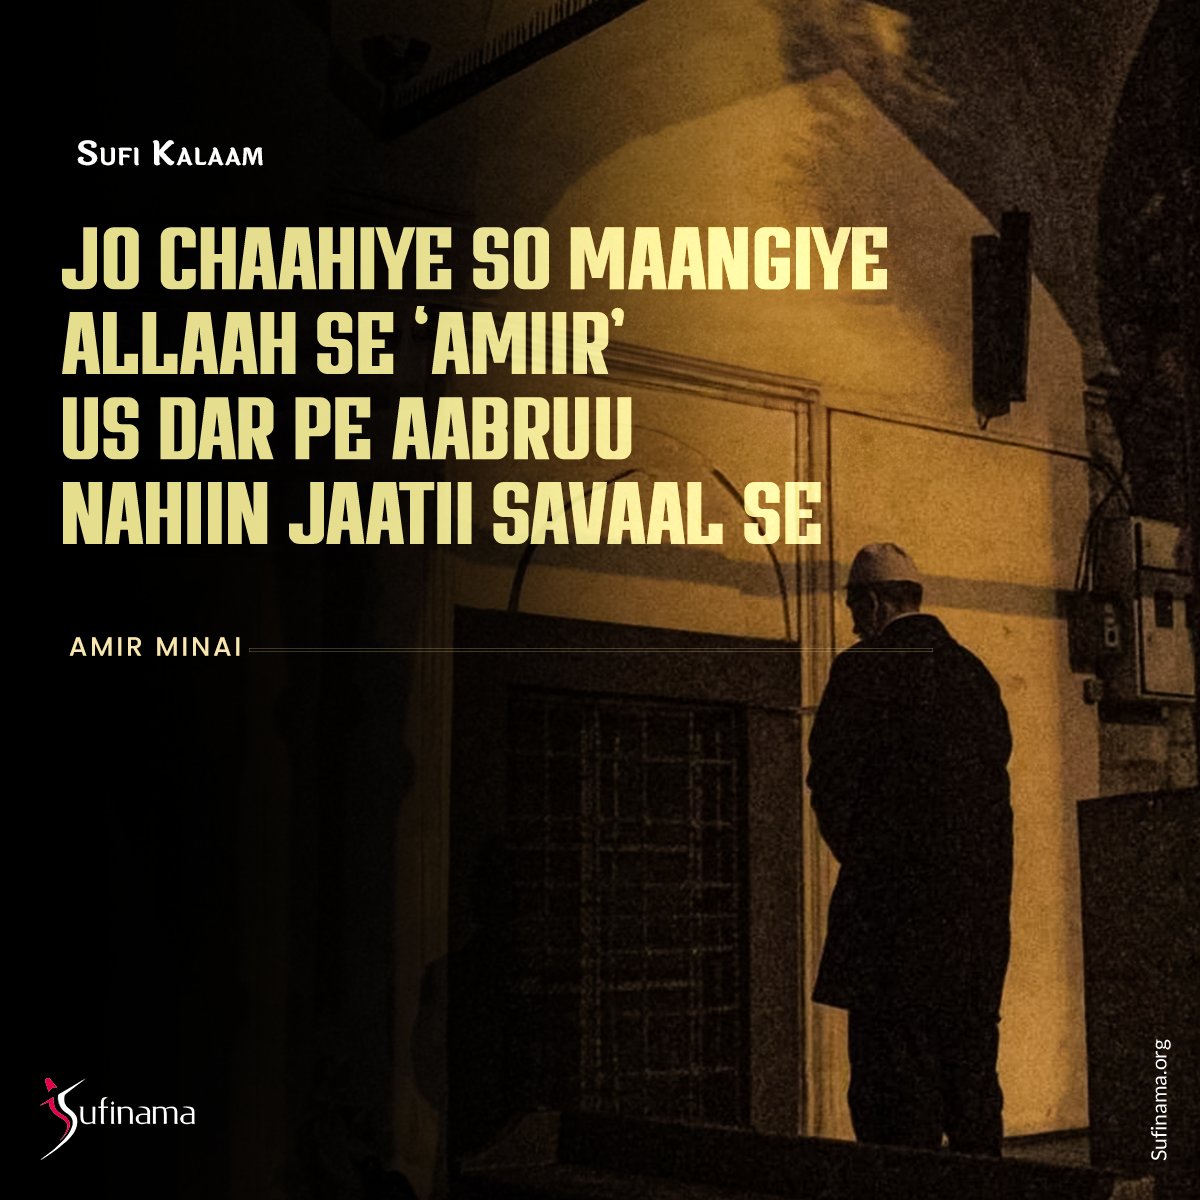 Sufi kalaam/ Amir Minai #sufinama #sufism #sufi #sufikalaam